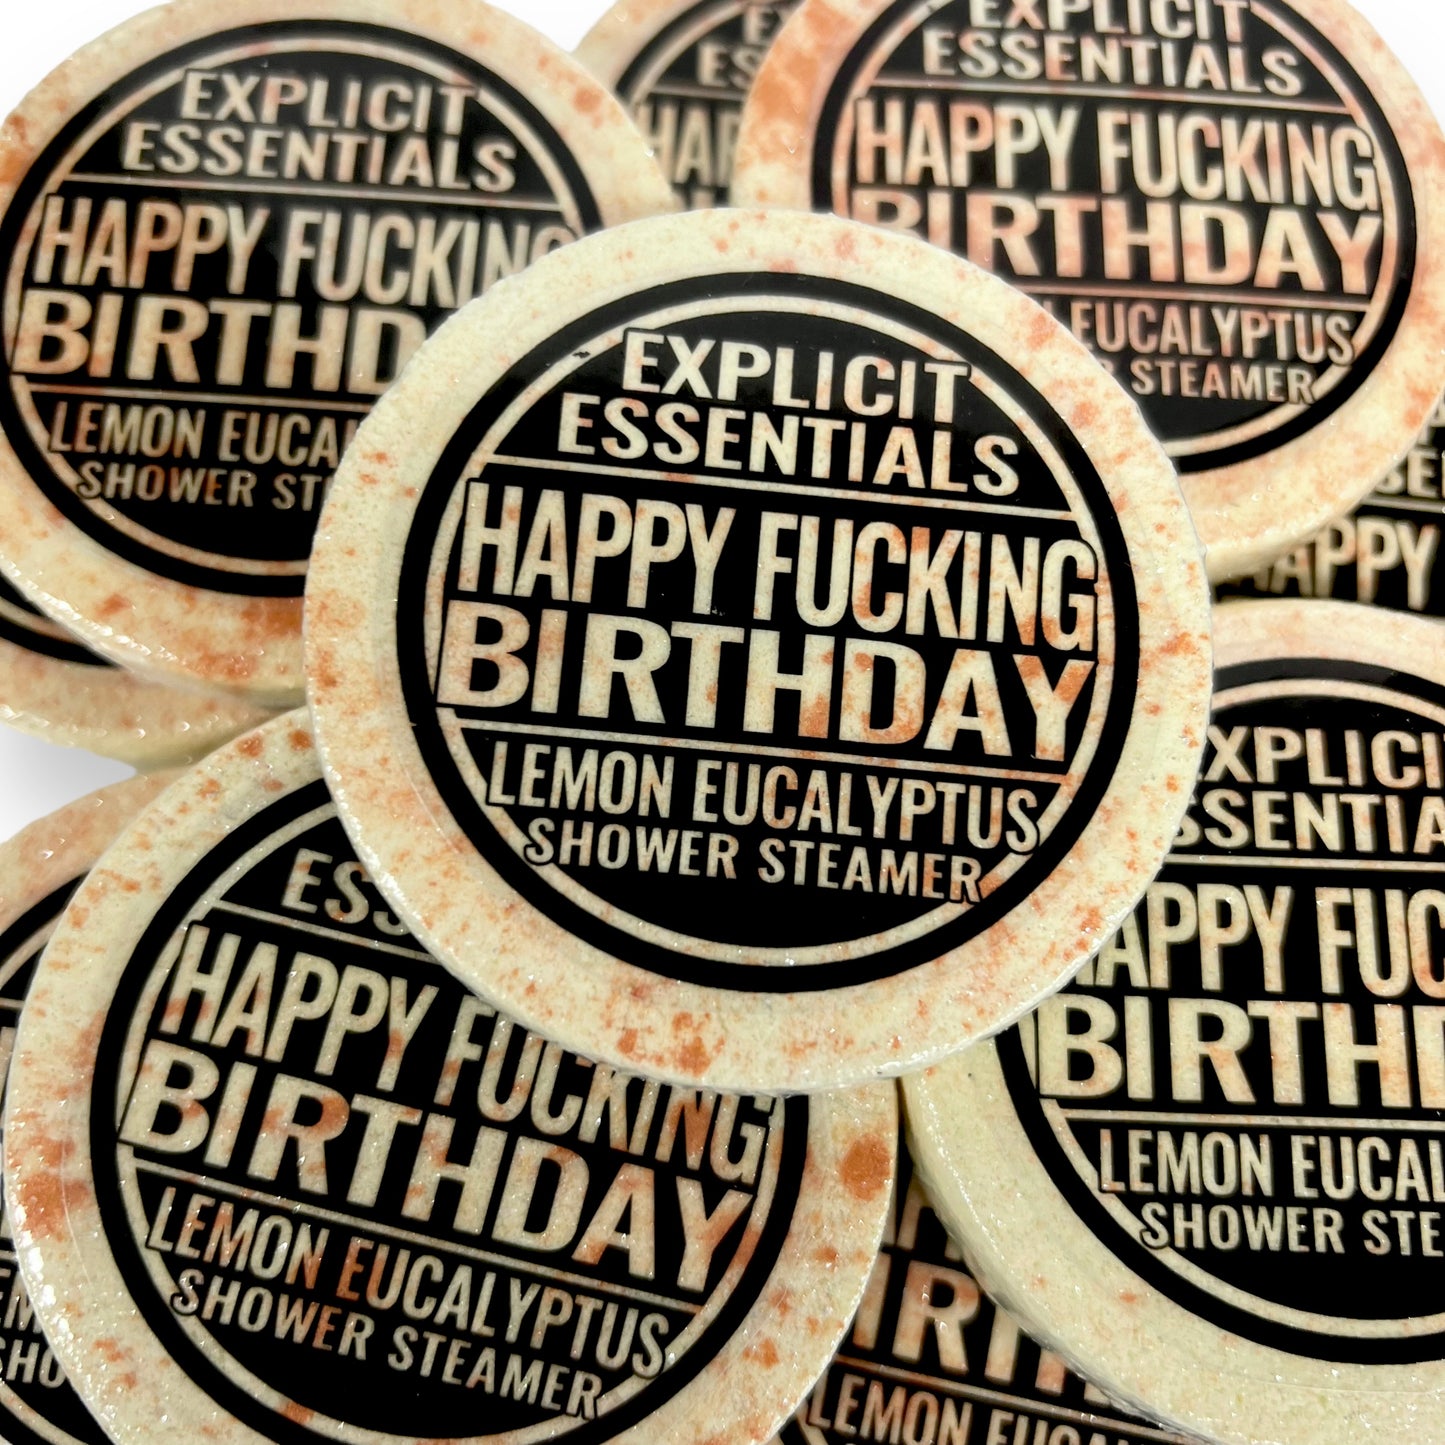 Happy Fucking Birthday Gift Box Set - Orange